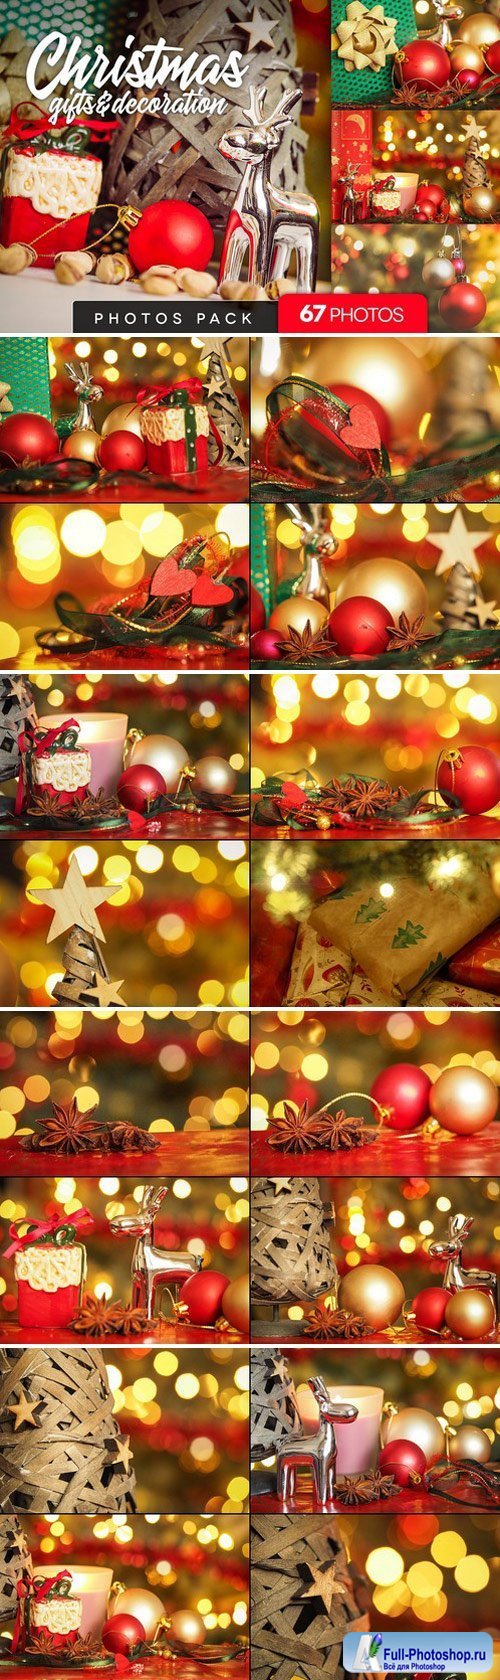 CM - Christmas gifts & decoration 67pics 2041709